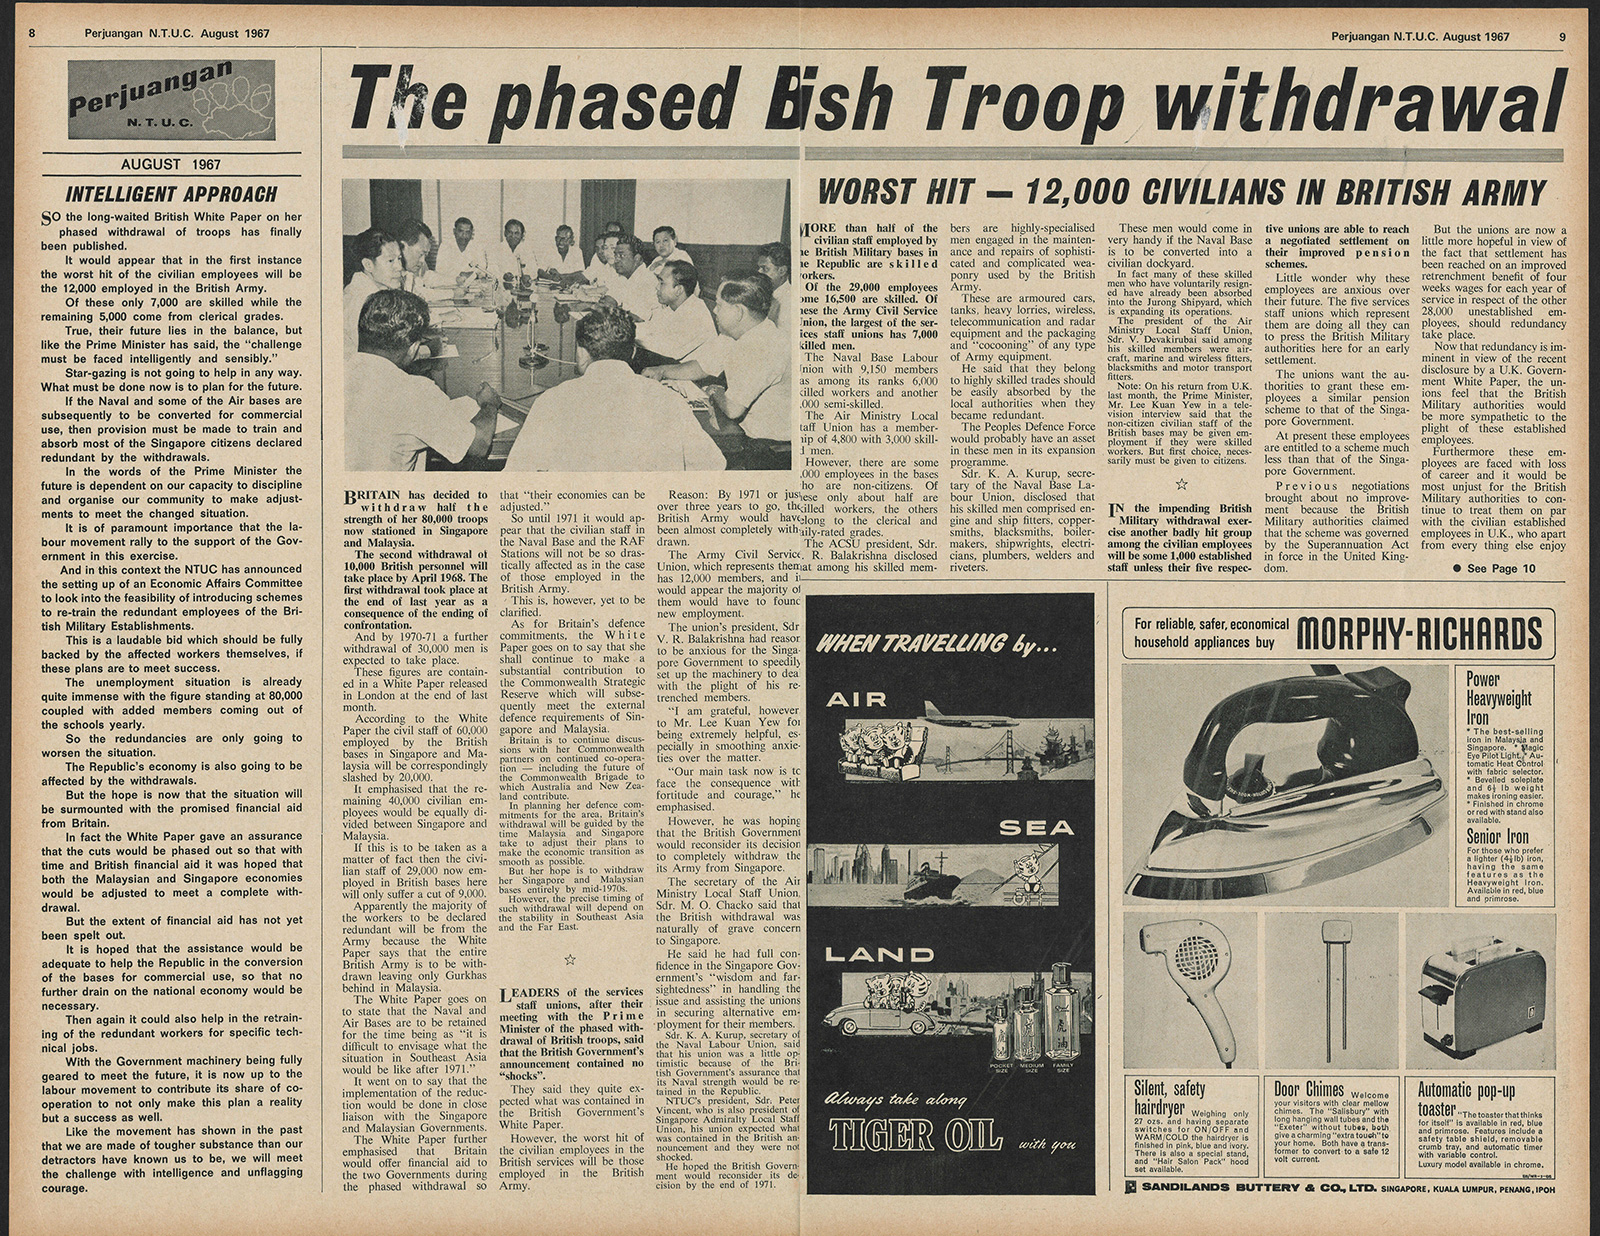 The phased British Troop withdrawal